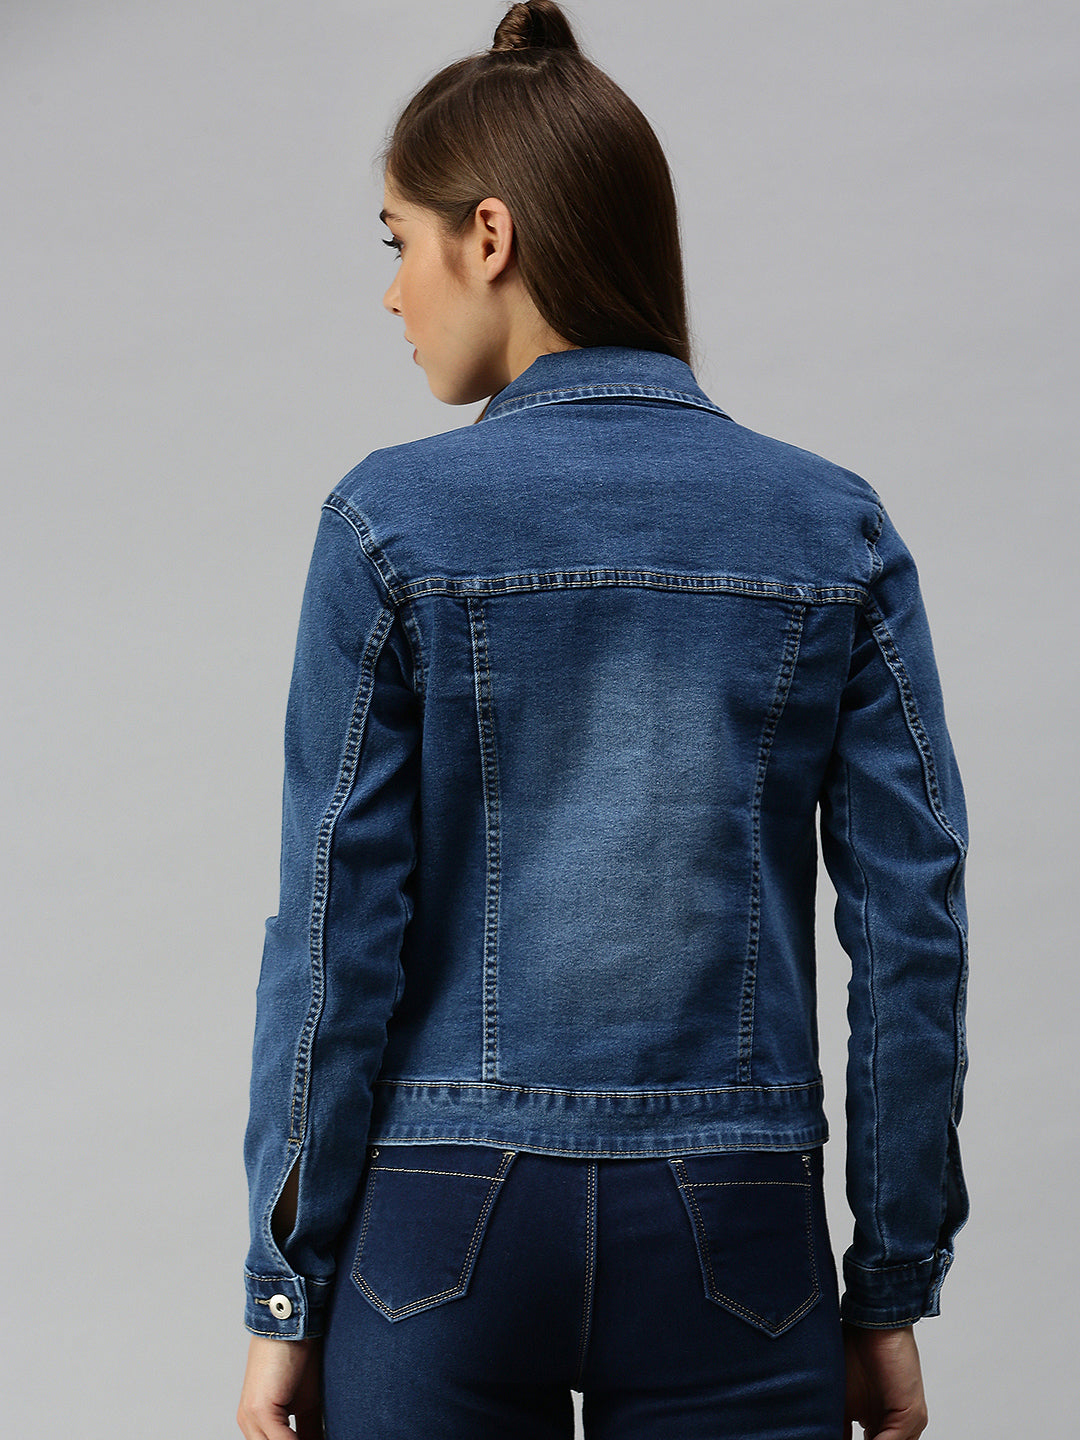 Women's Blue Solid Denim Jacket Jackets